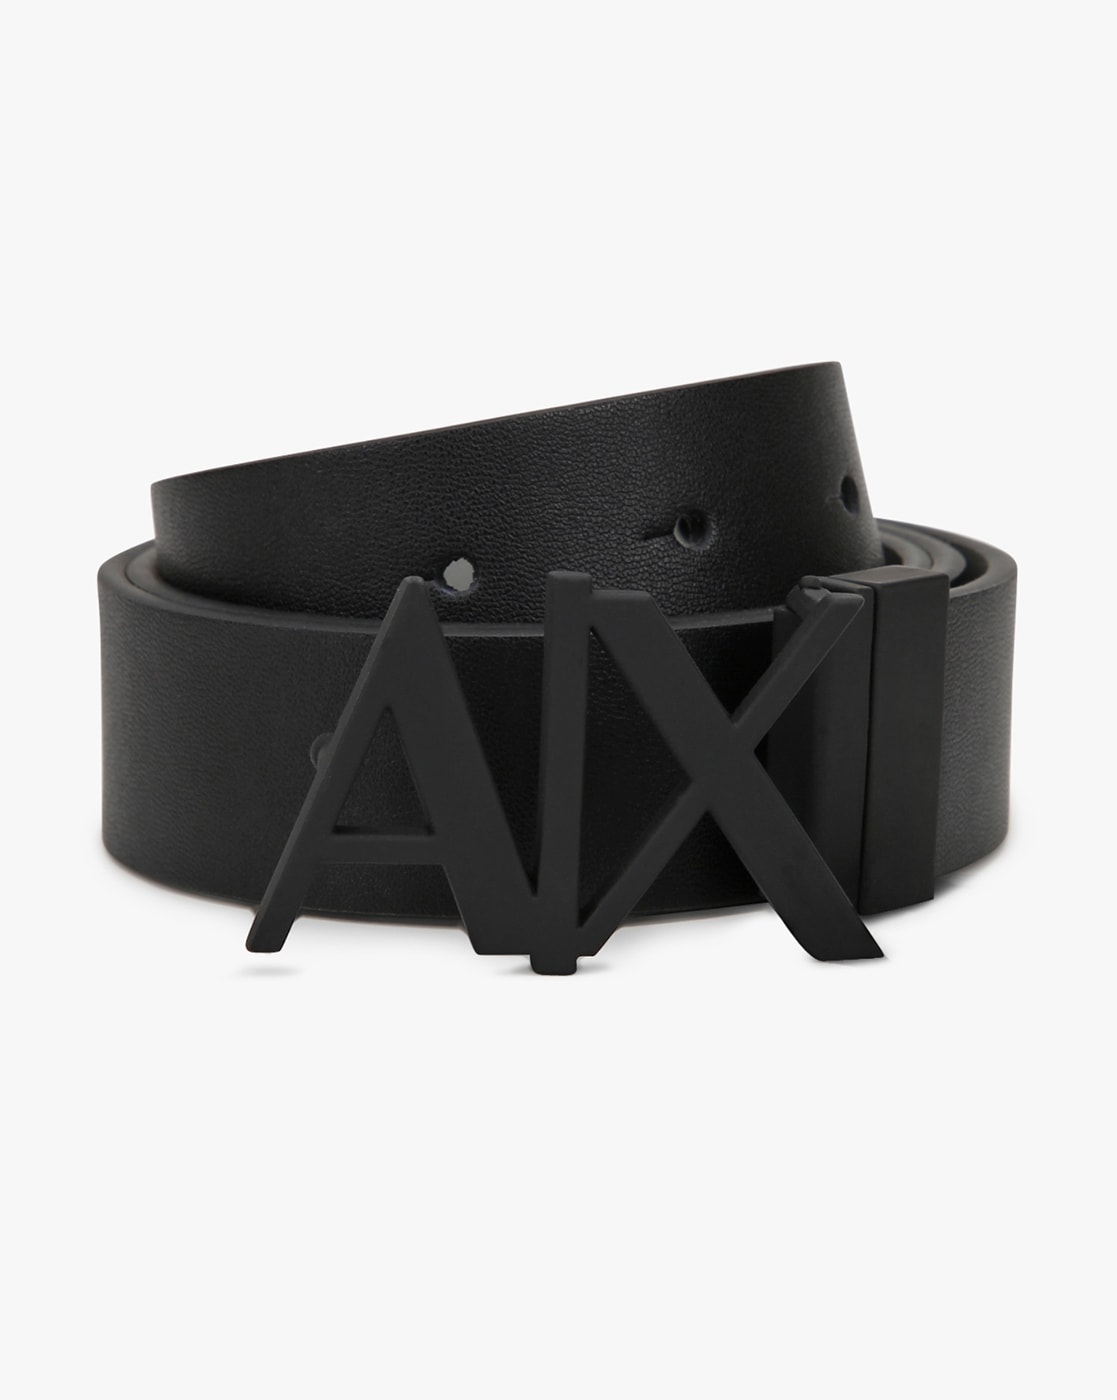 aix belt price